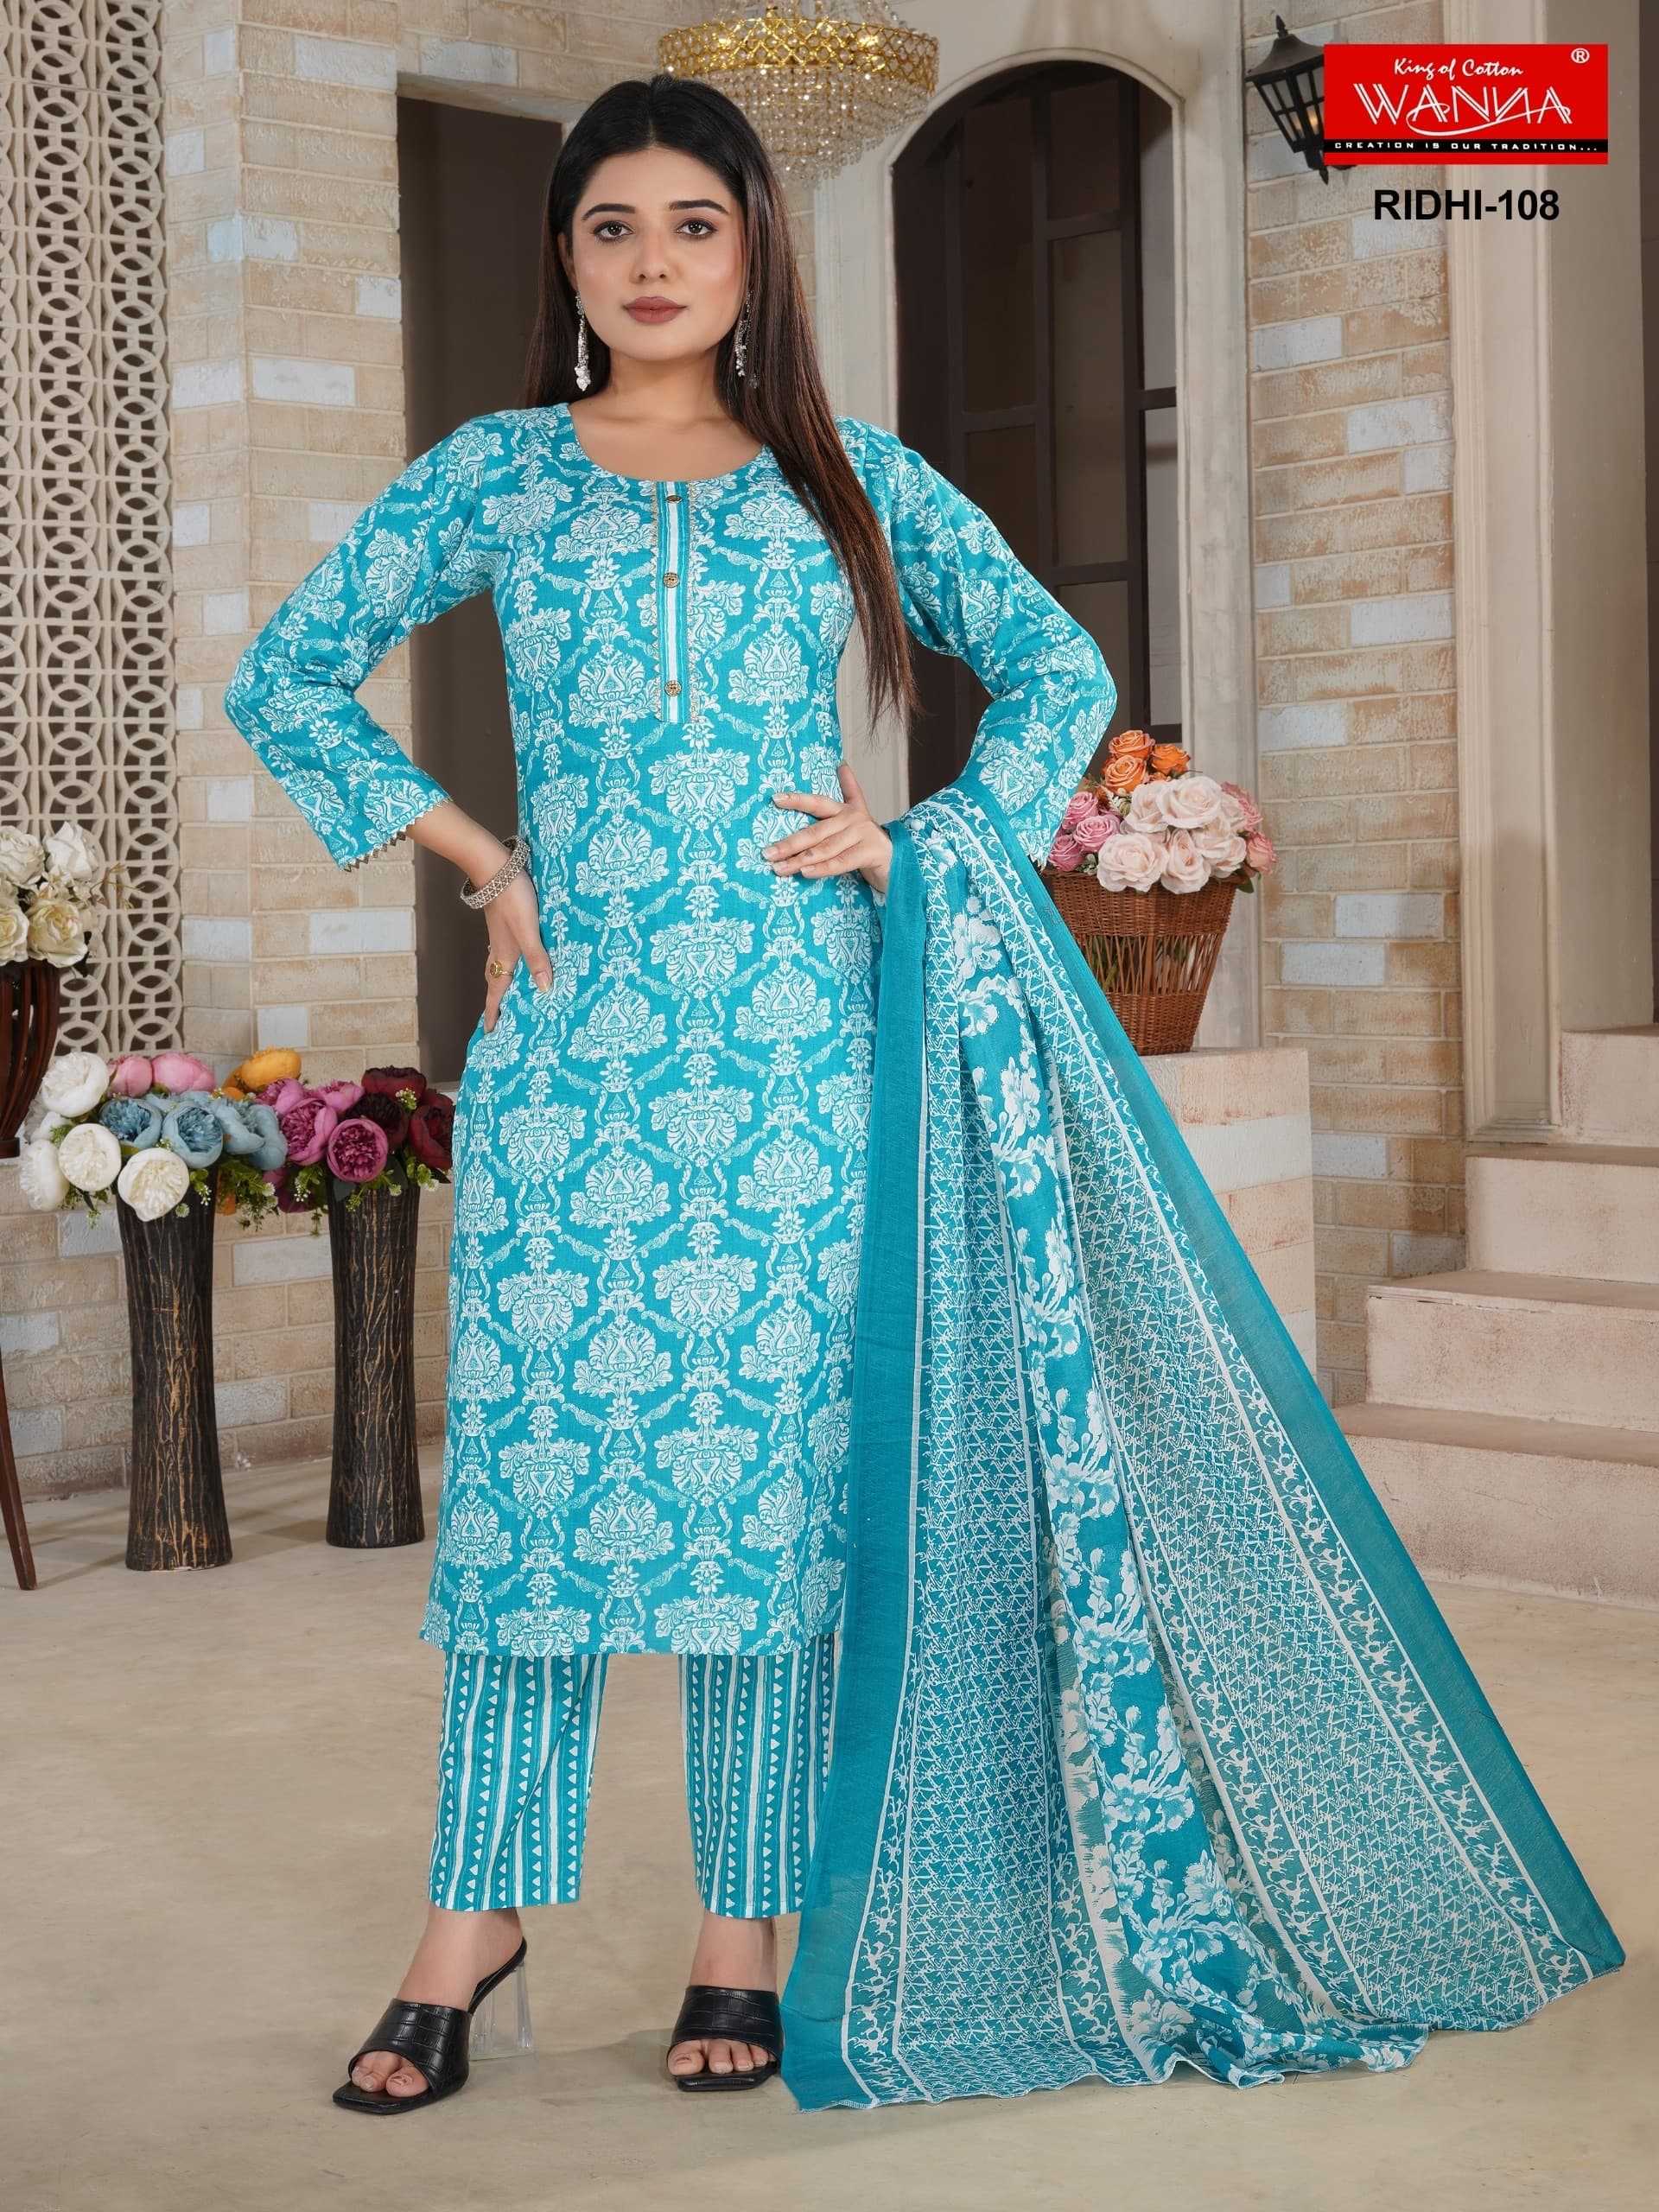 ridhi by wanna full stitch cotton printed stylish outfit salwar kameez 